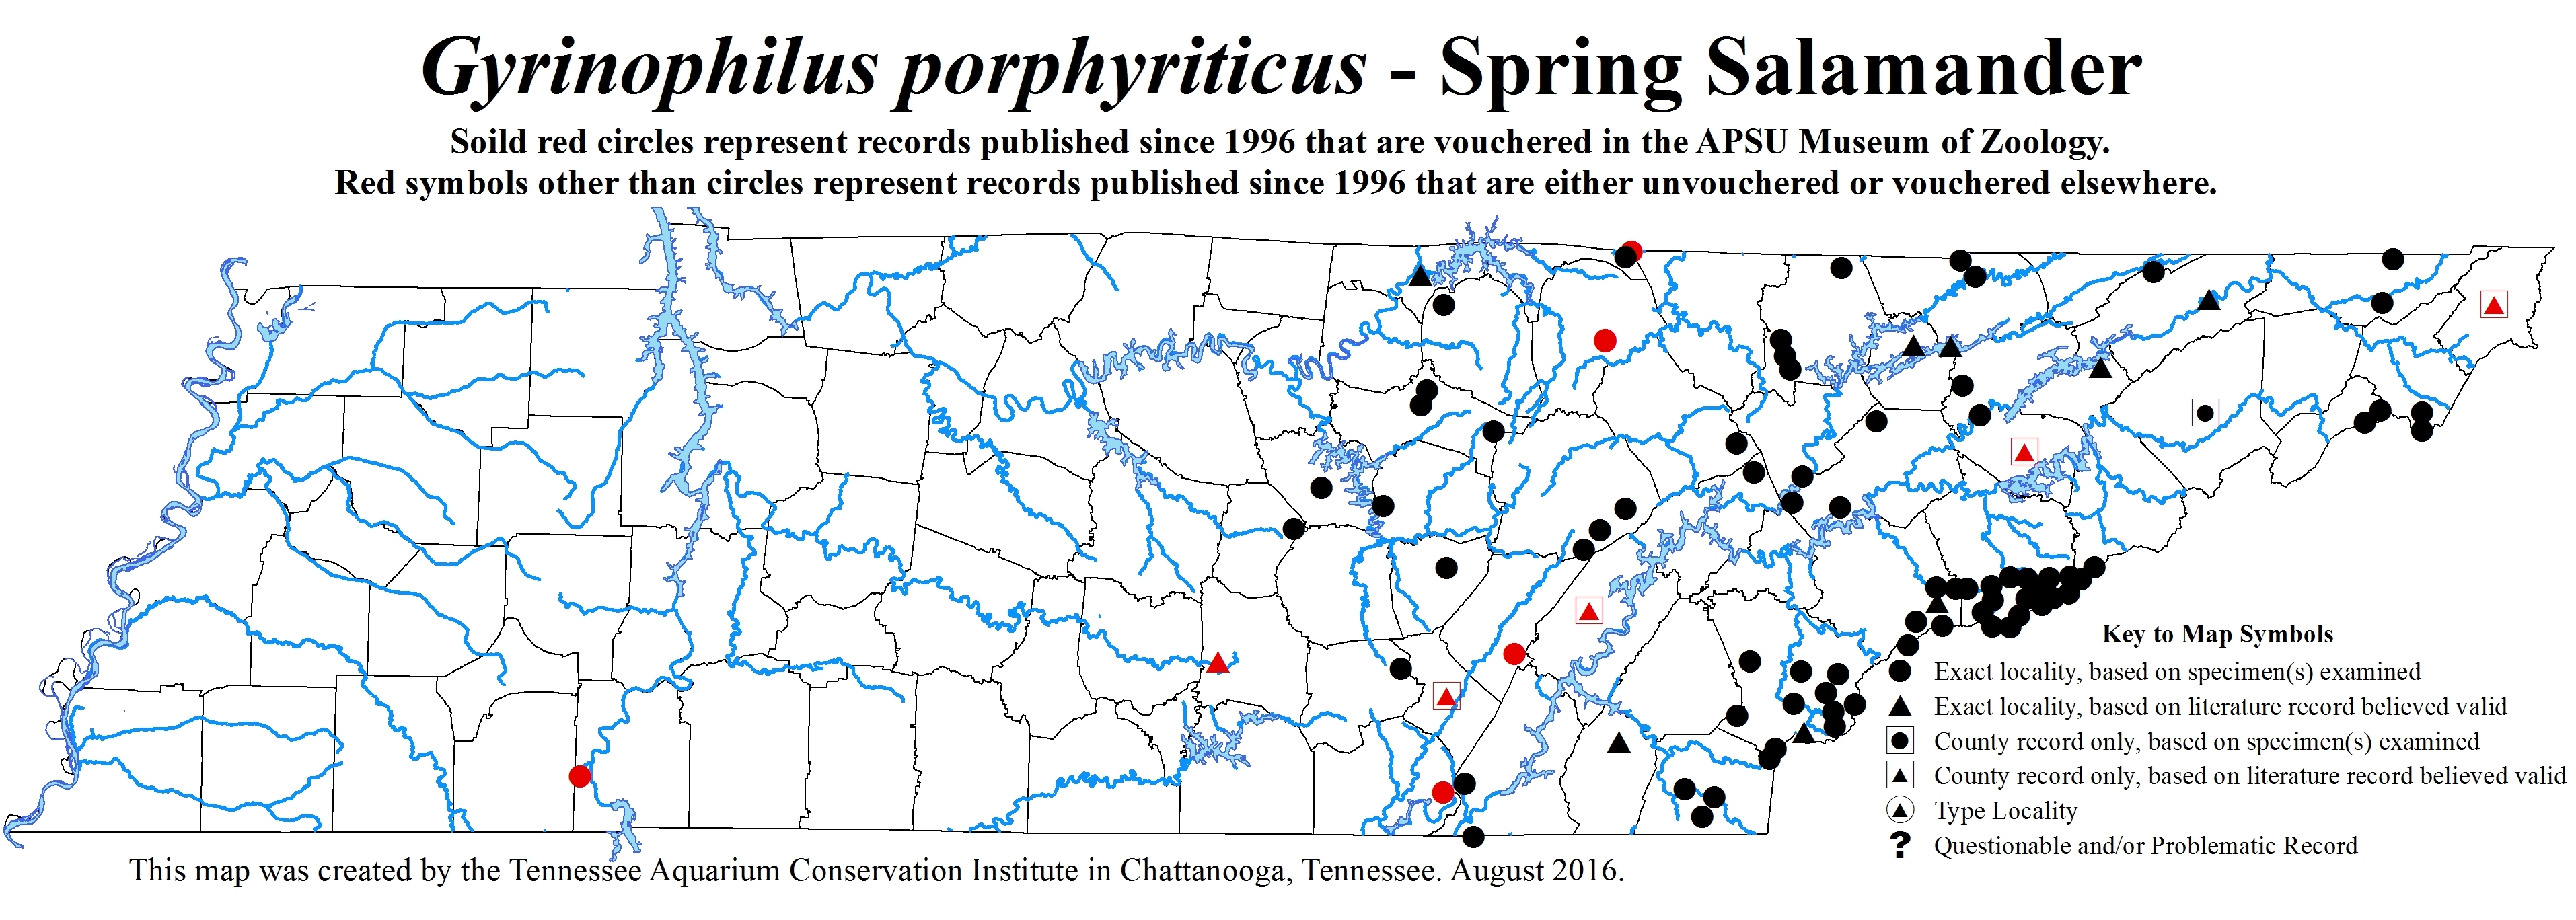 Update to Gyrinophilus porphyriticus